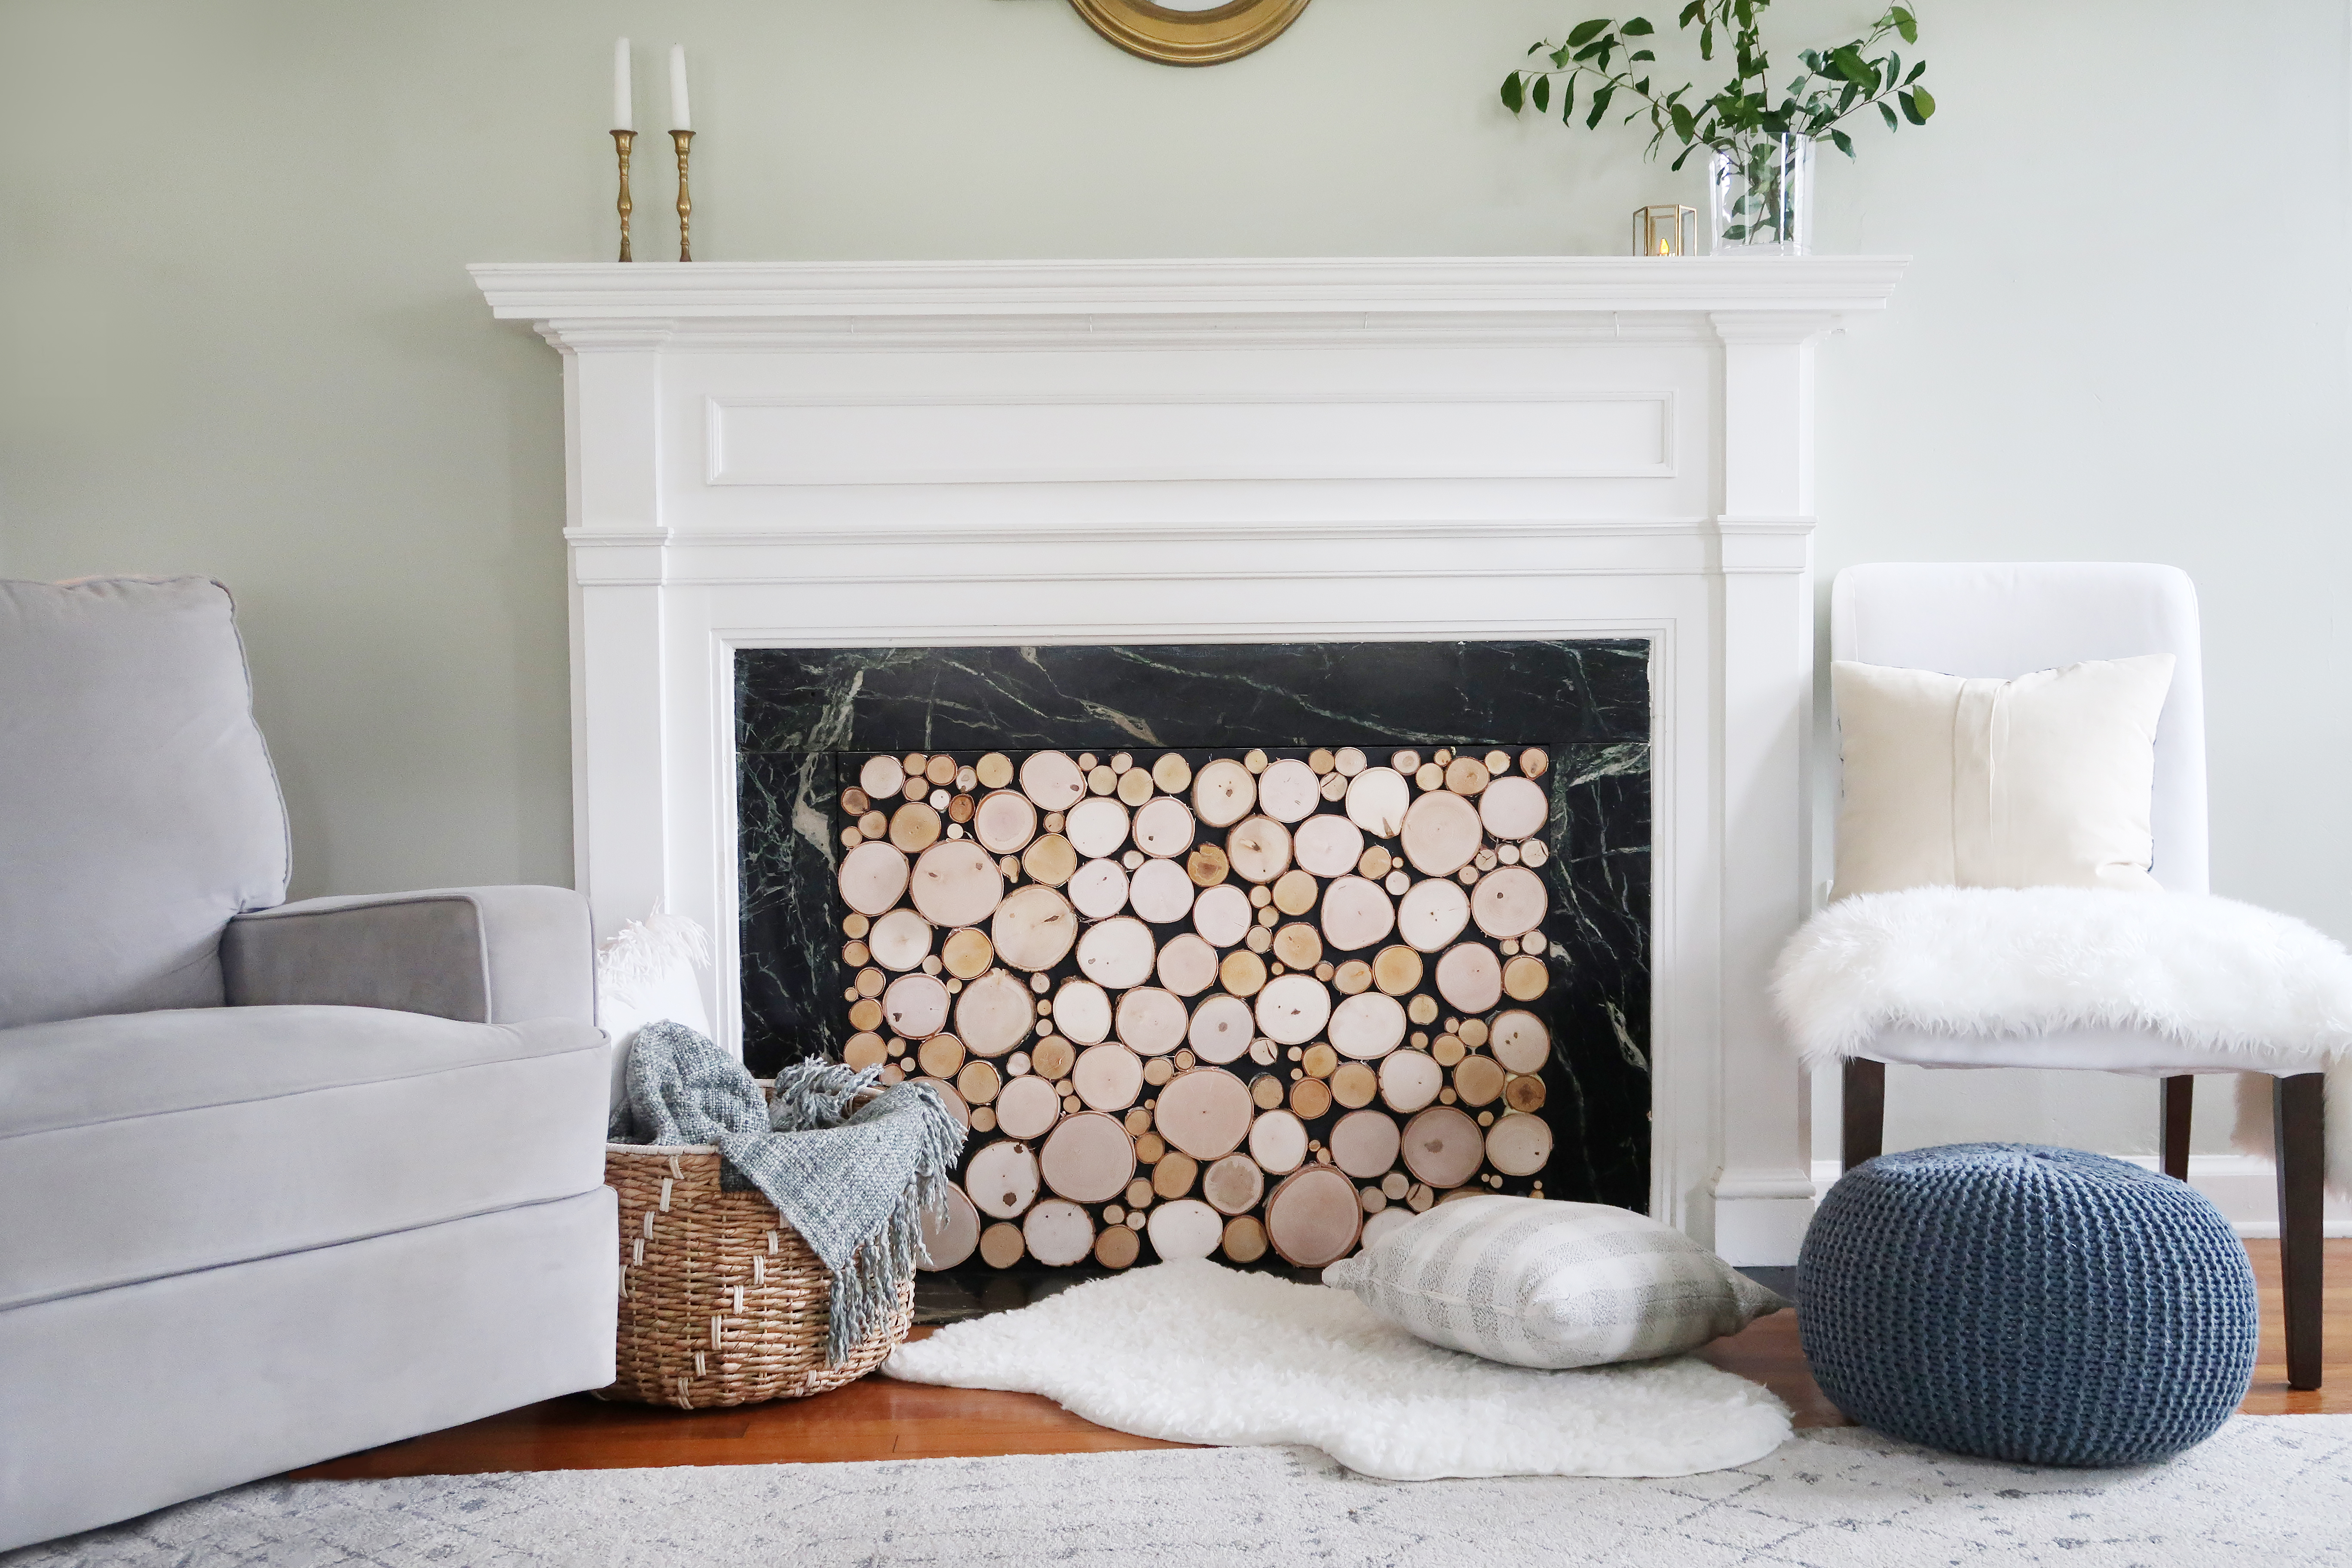 DIY Fireplace Cover Tutorial